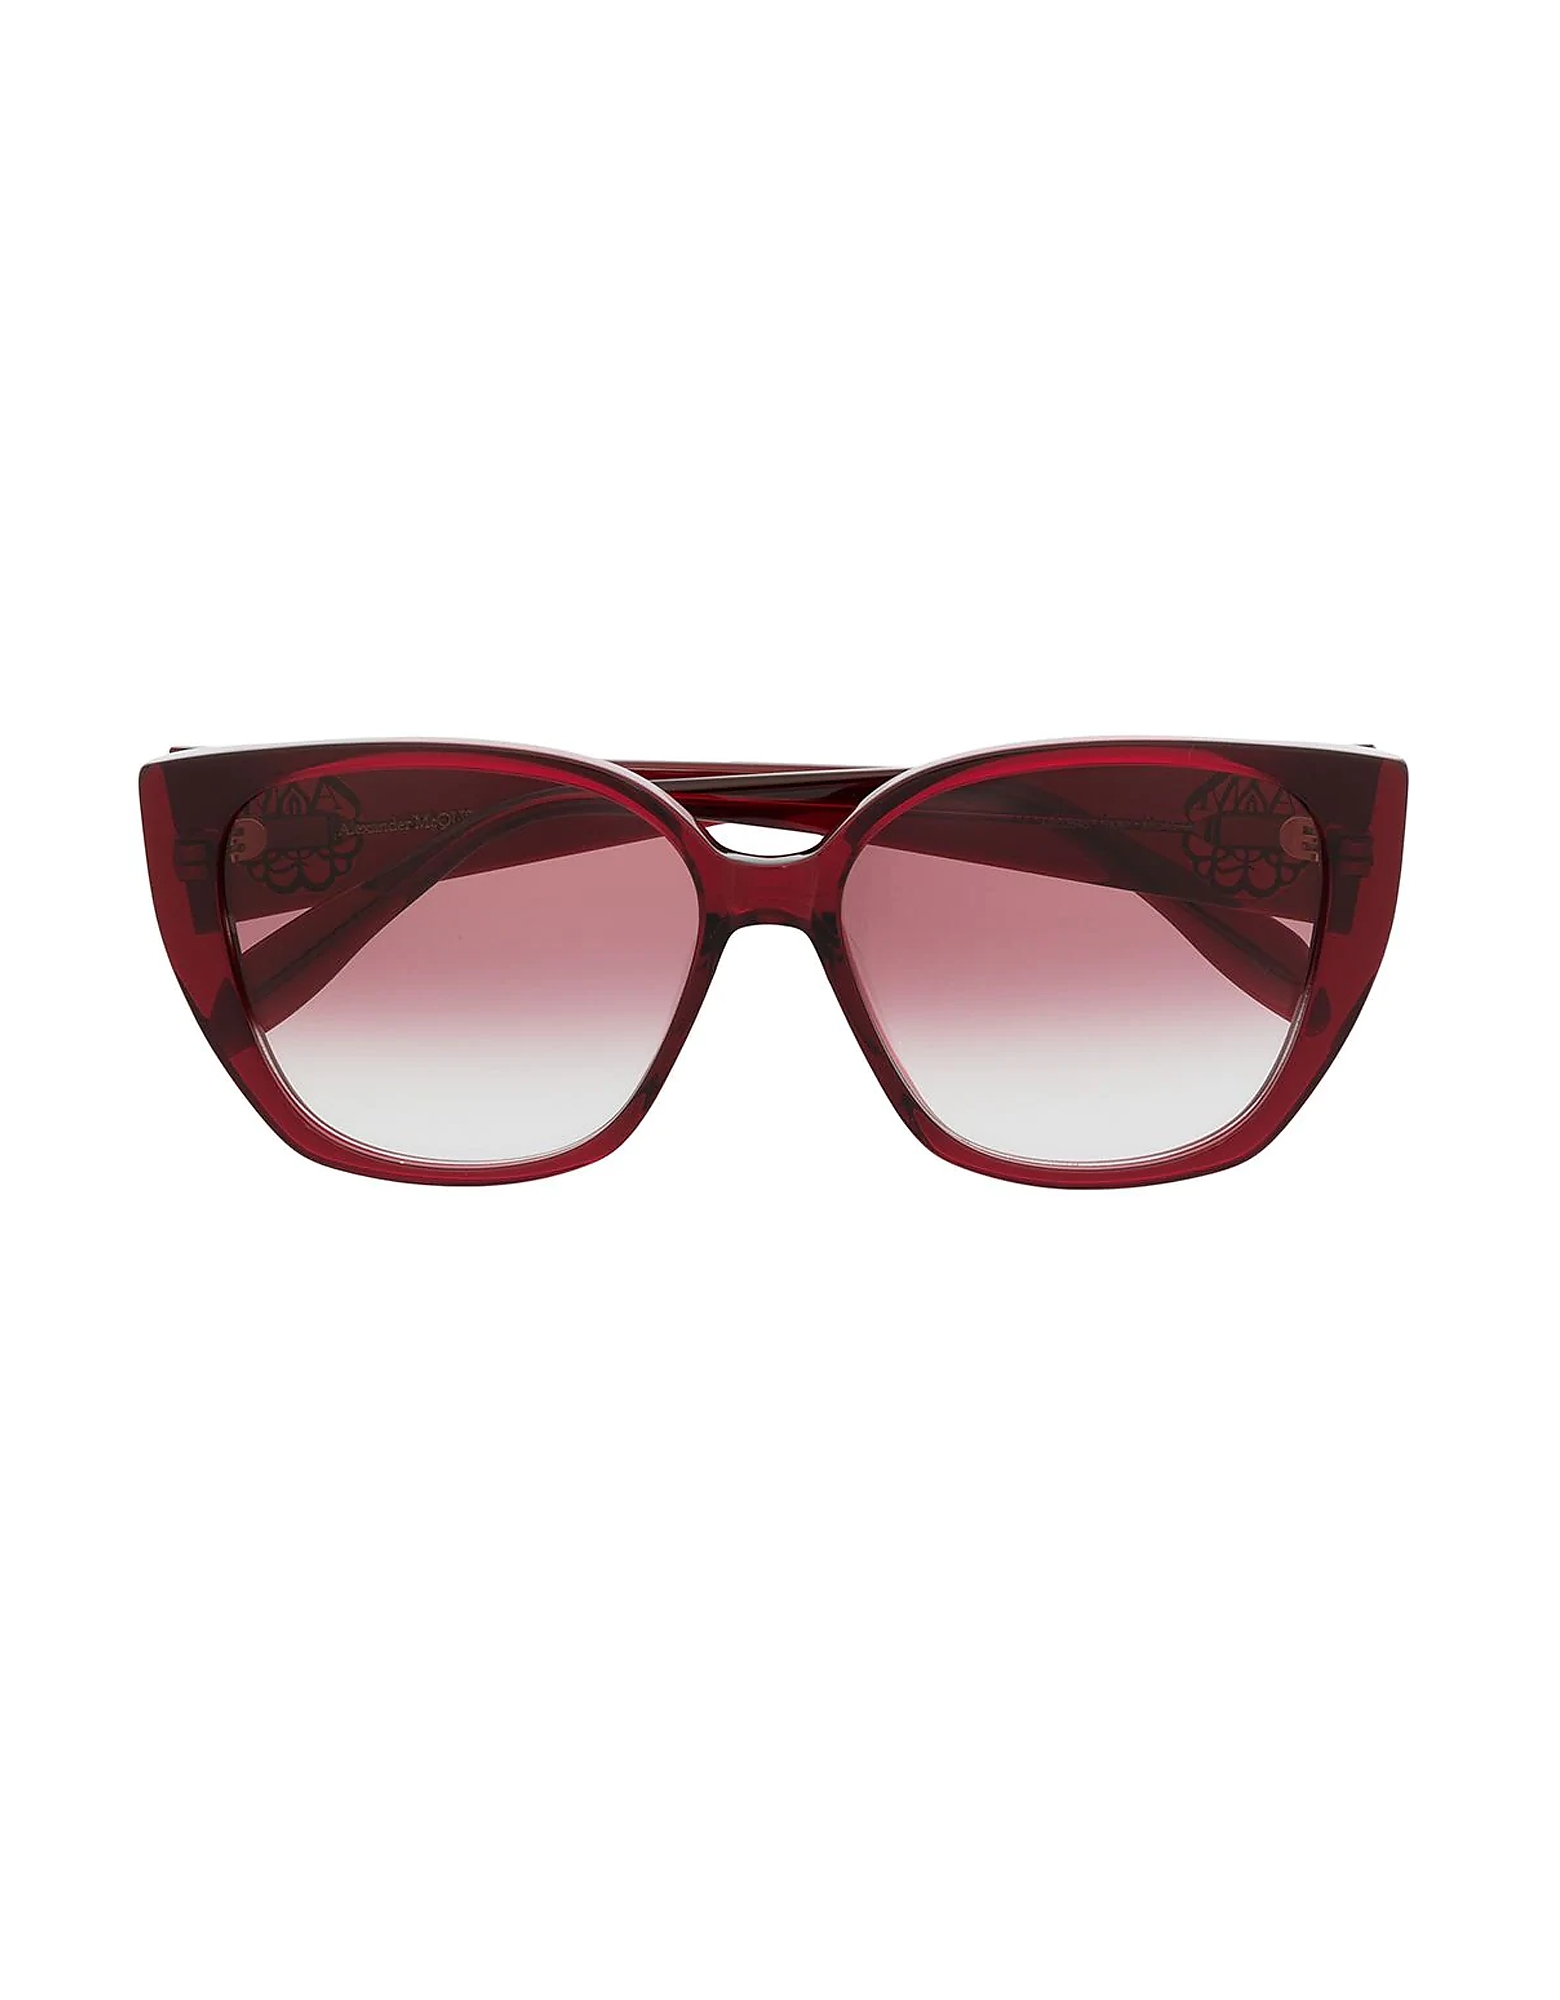 Alexander McQueen Sunglasses AM0284S Burgundy Acetate Cat Eye-frame Women's Sunglasses